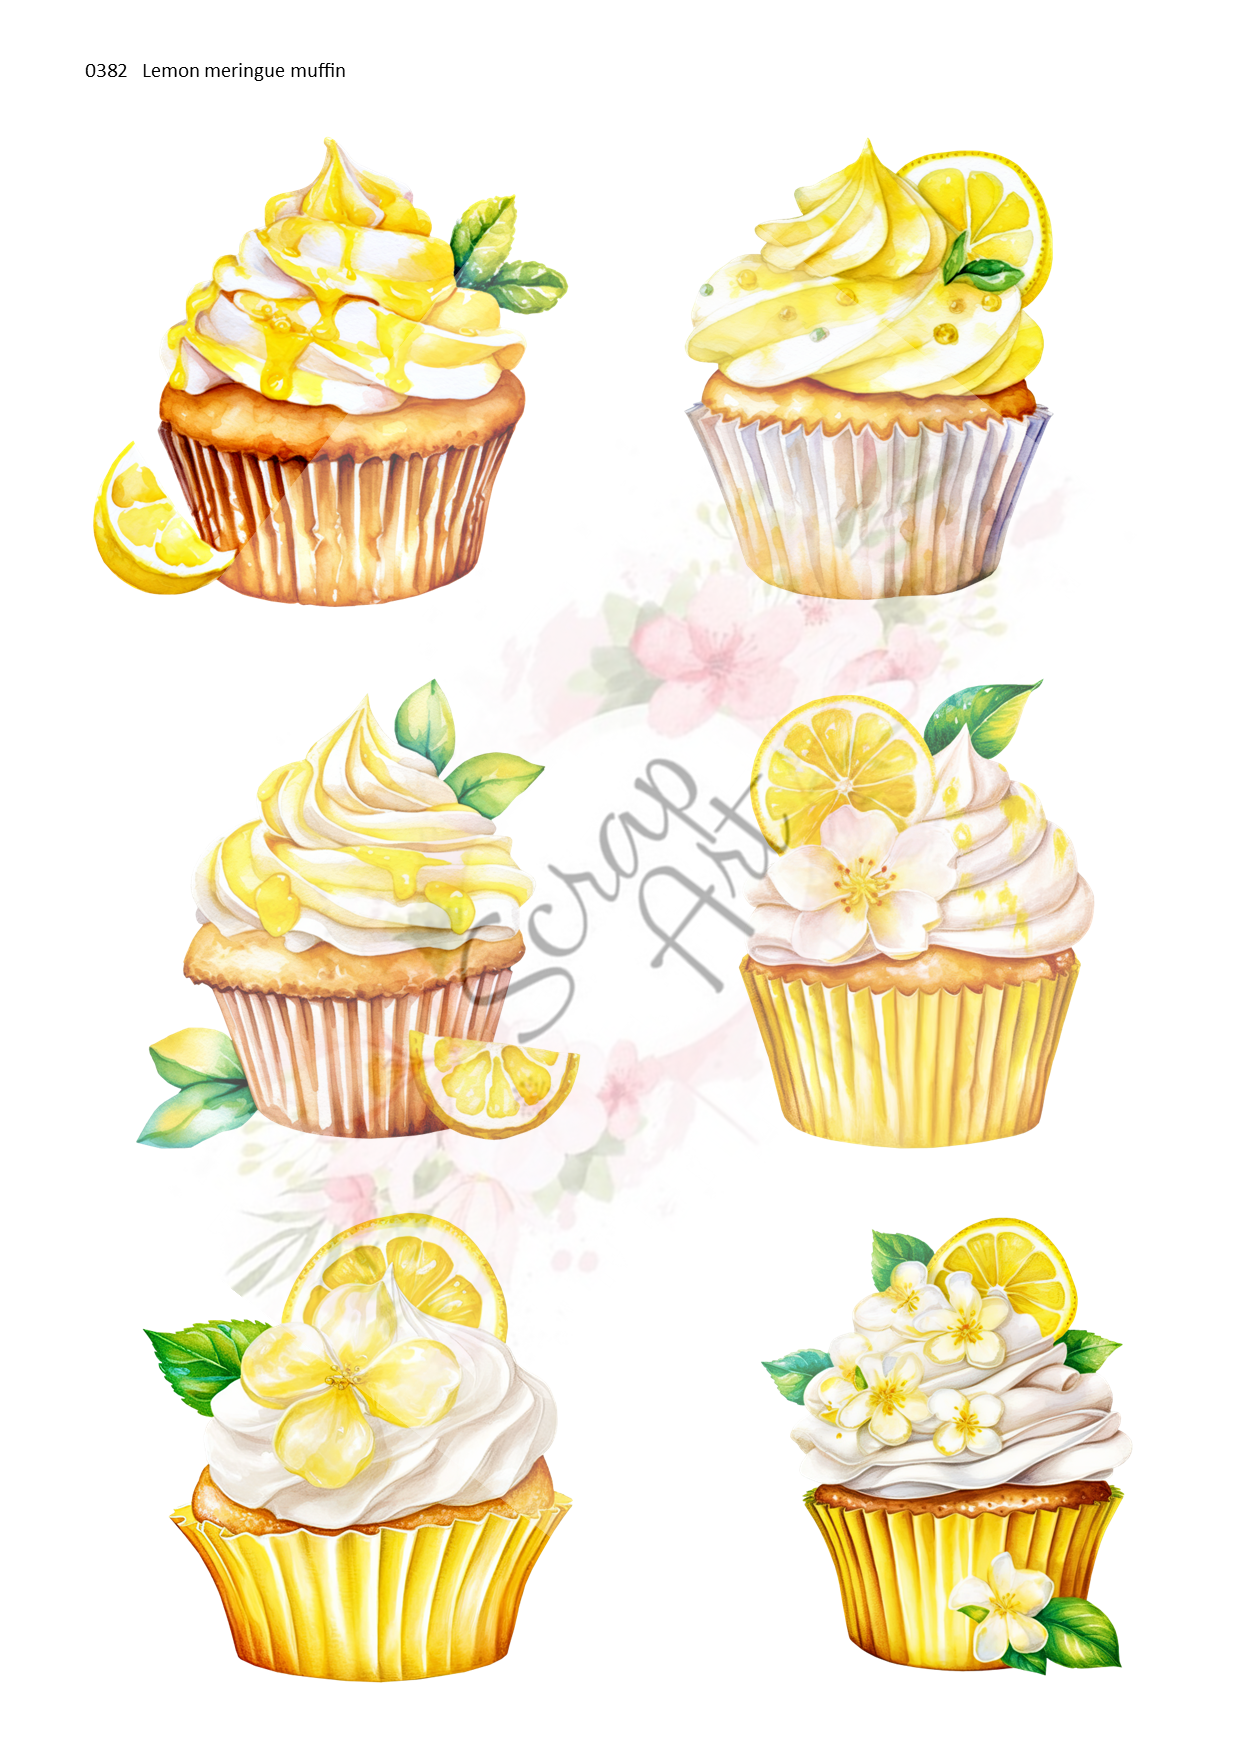 0382 Lemon meringue muffin